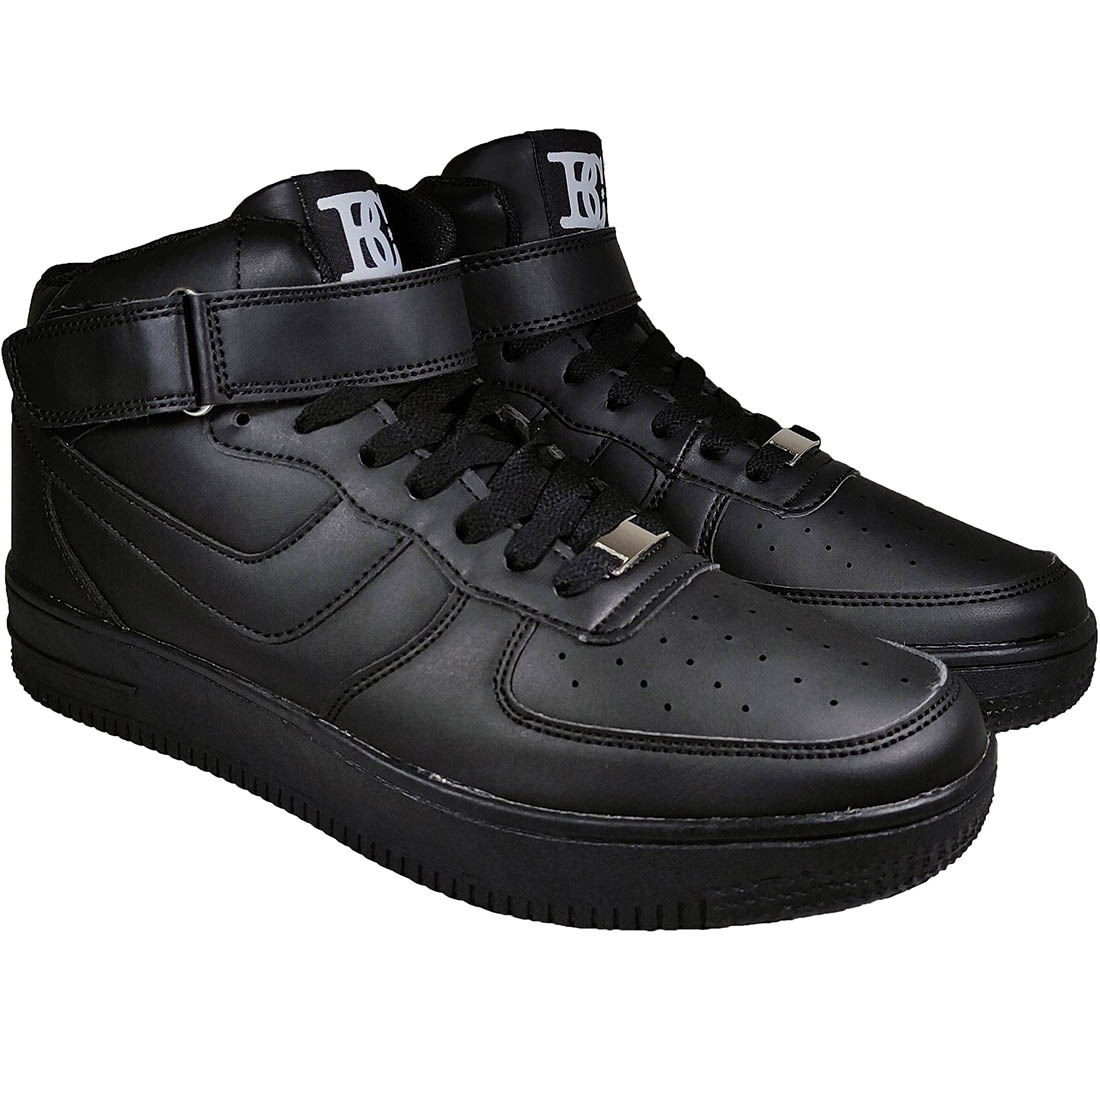 Sports Boots BC SD26026 Black